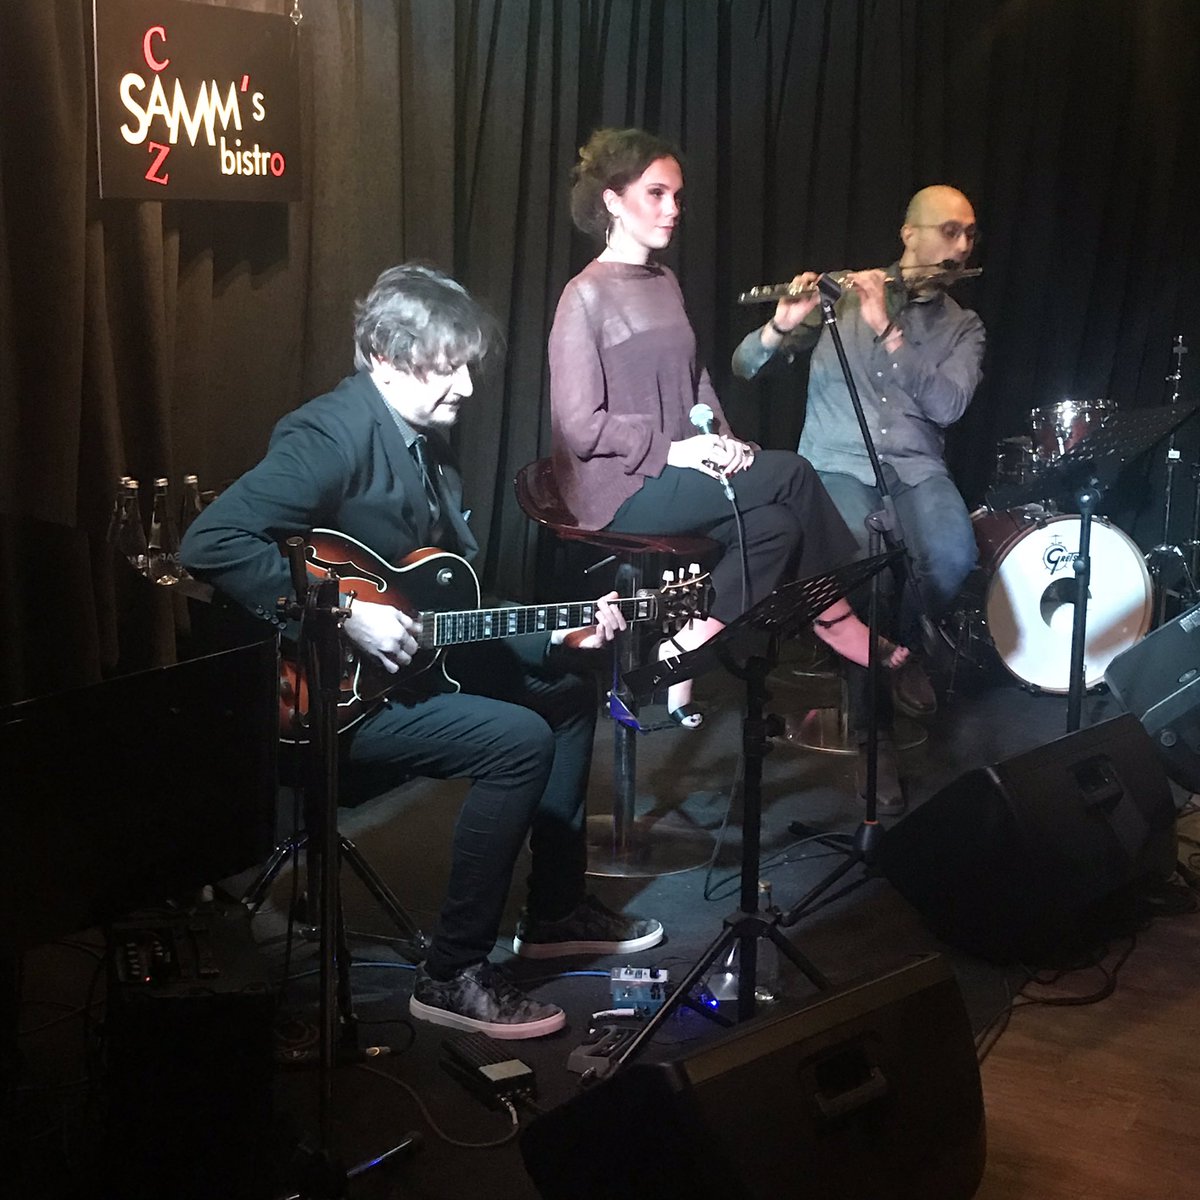 SAMM’s bistro da Su İdil Trio Konseri basladi. #suidil #sarpayozcagatay #onuraymergen #jazz #caz #sammsbistrocazdayolculuk #ankaracaz #sammsbistro #hotelsamm #ankara